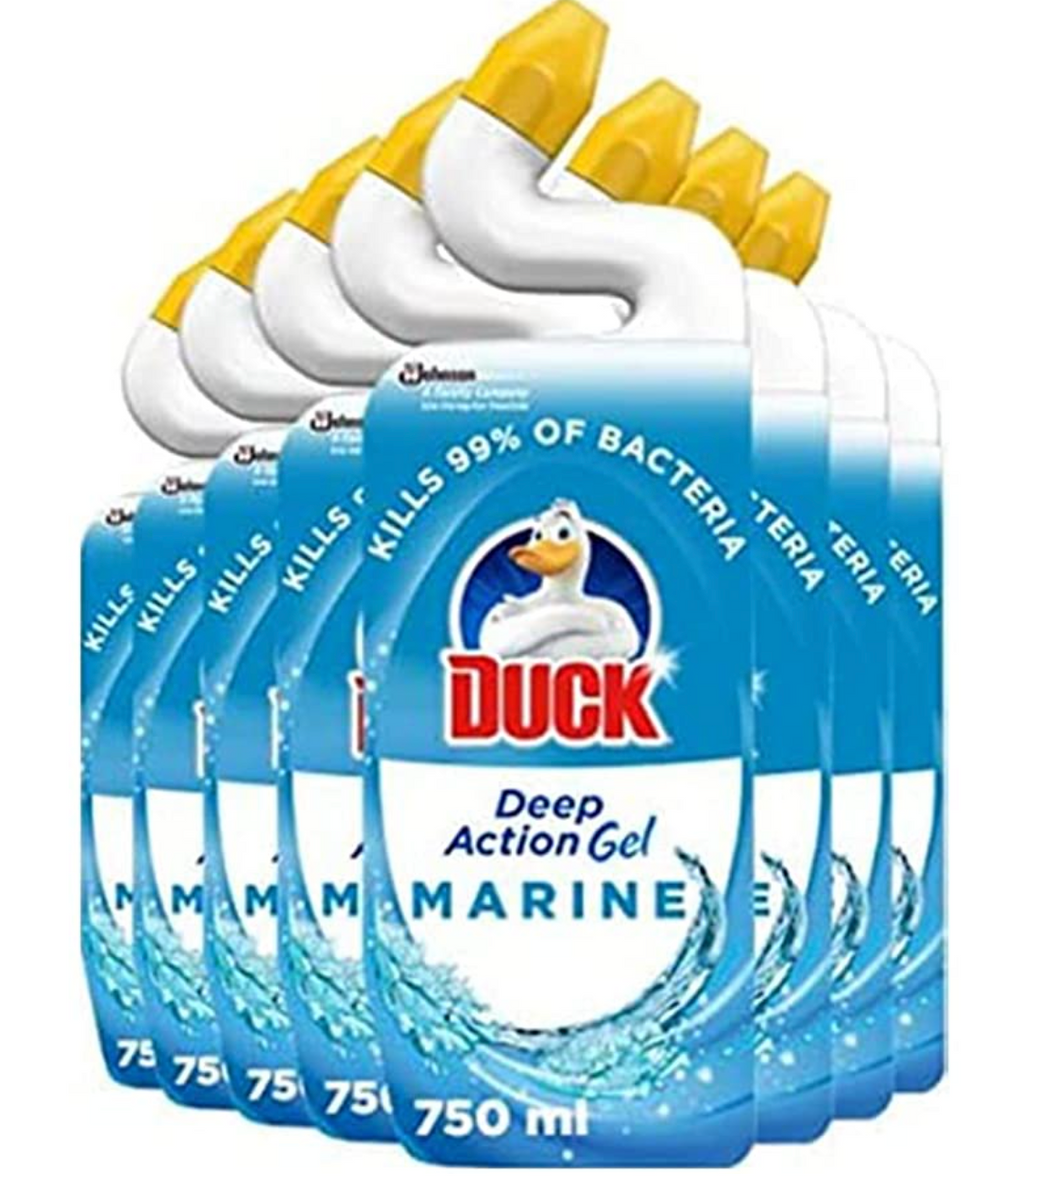 Duck Toilet Bowl Cleaner Liquid, Deep Action Gel, Marine, 750 ml - (1 Bottle)